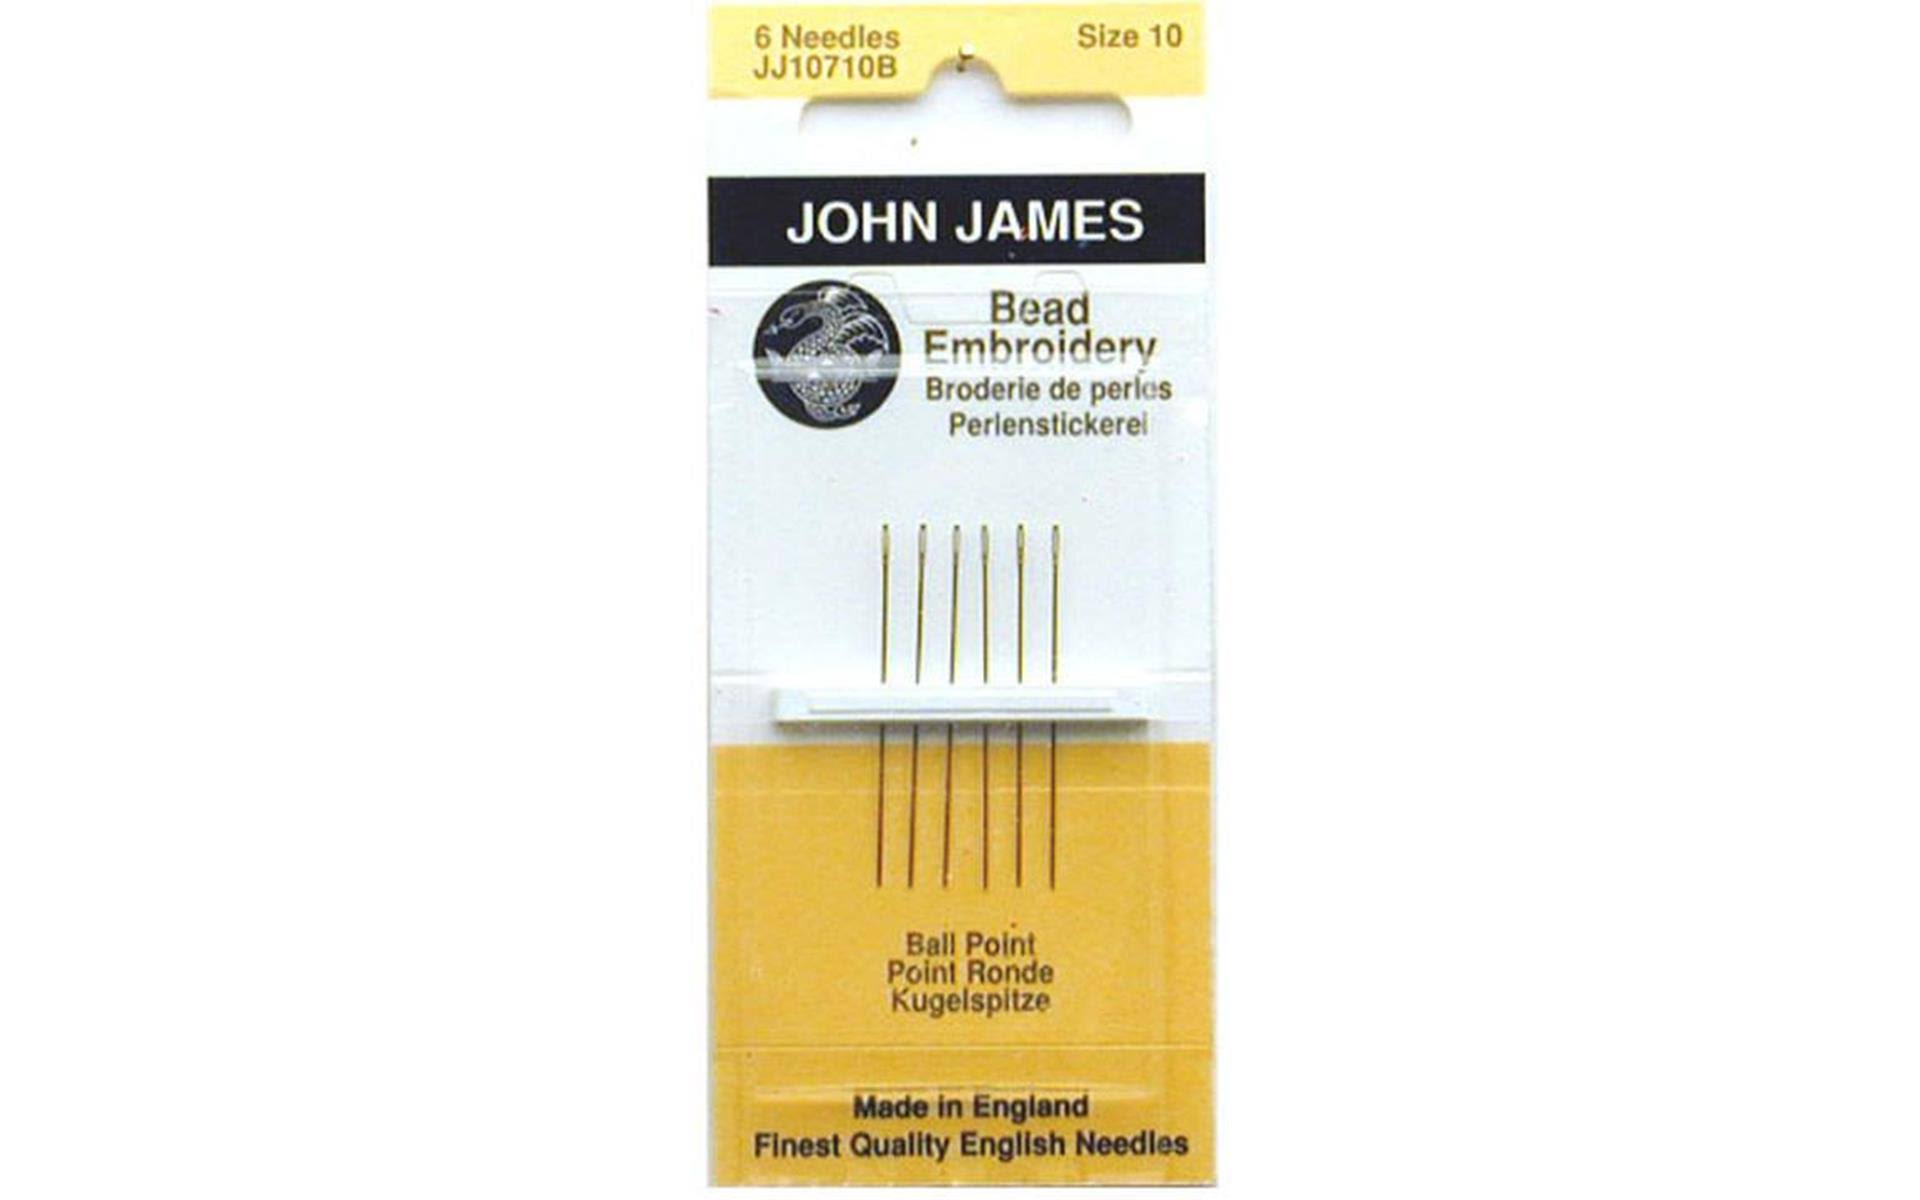 John James Ball Point Bead Embroidery Needles - Size 10, 6pcs